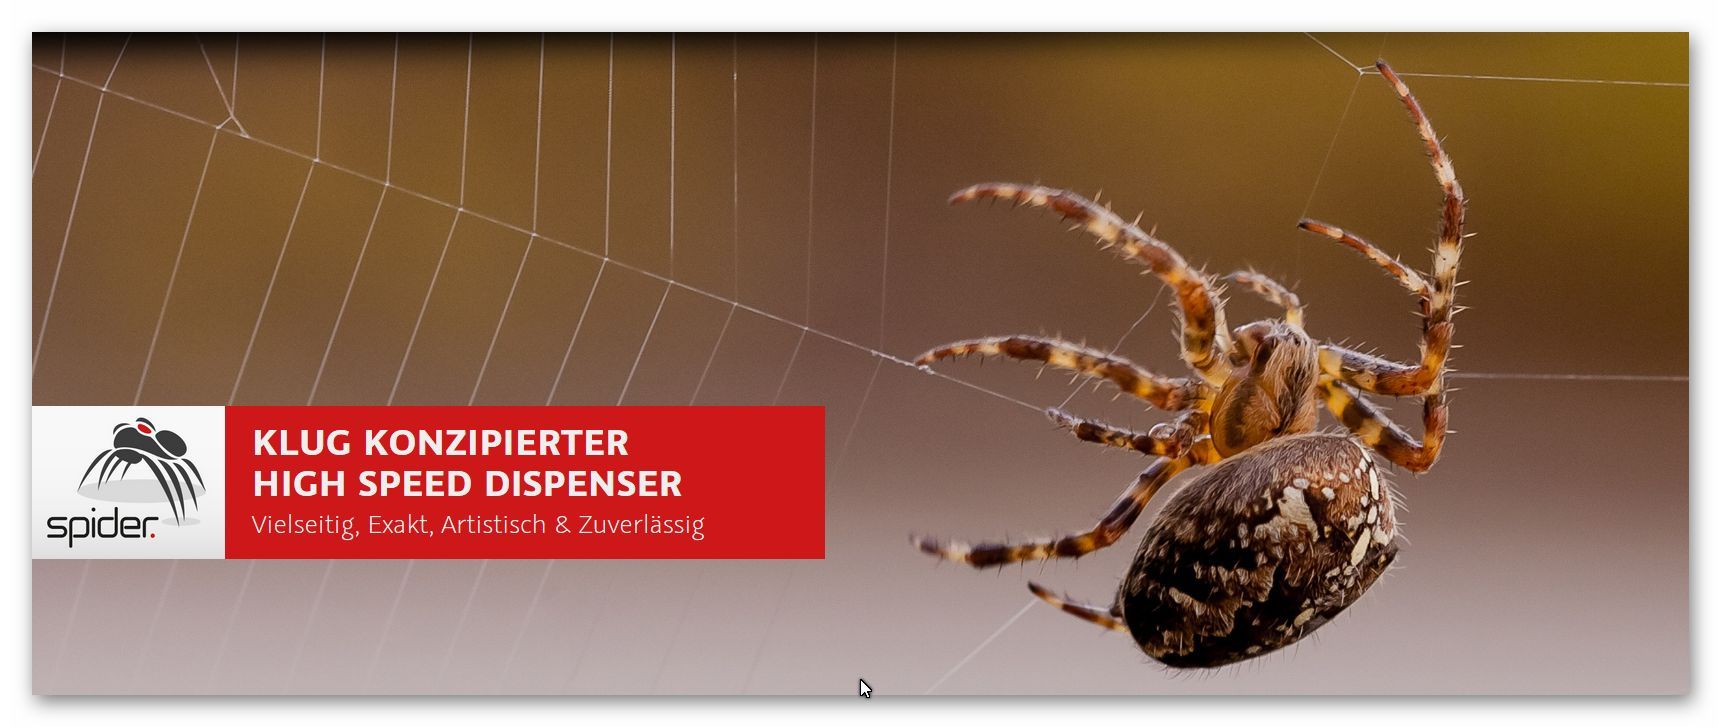 Dispenssystem_Spider